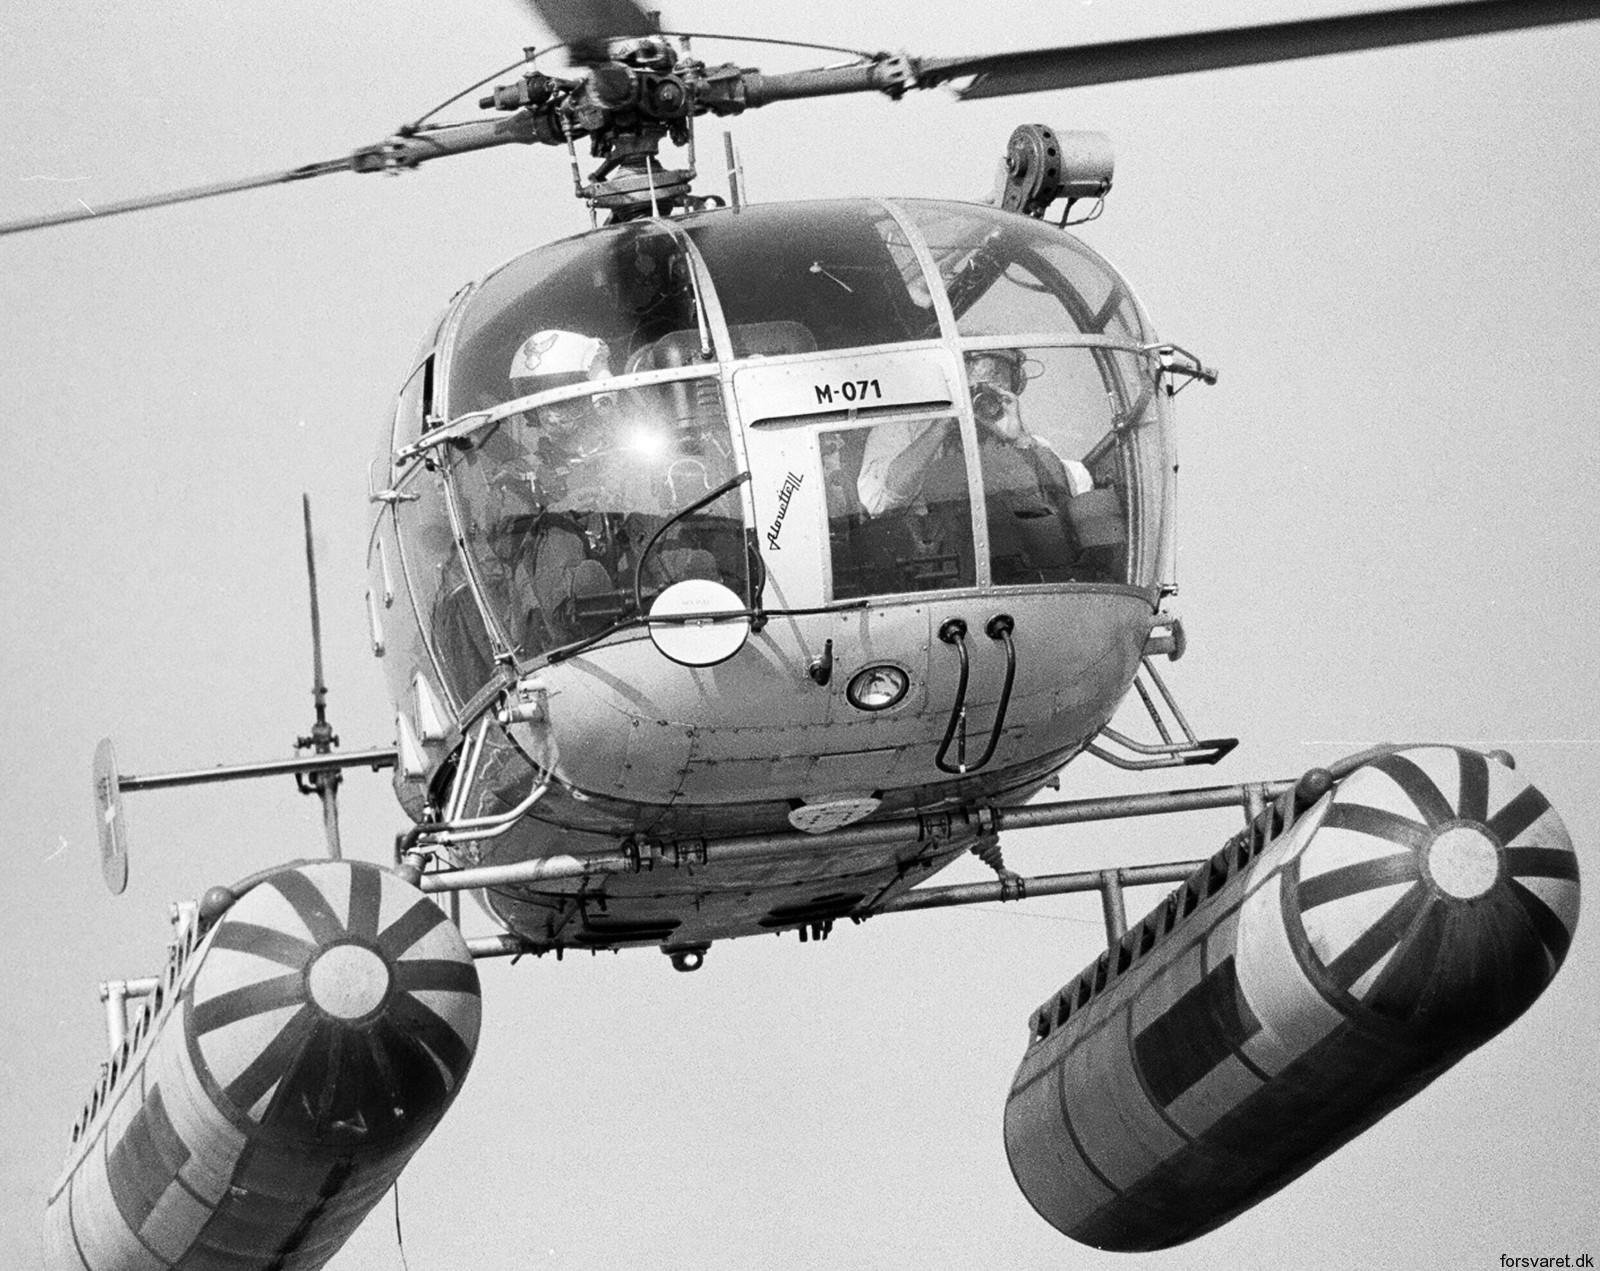 sa 316b alouette iii helicopter royal danish navy søværnet kongelige danske marine sud aviation m-071 13